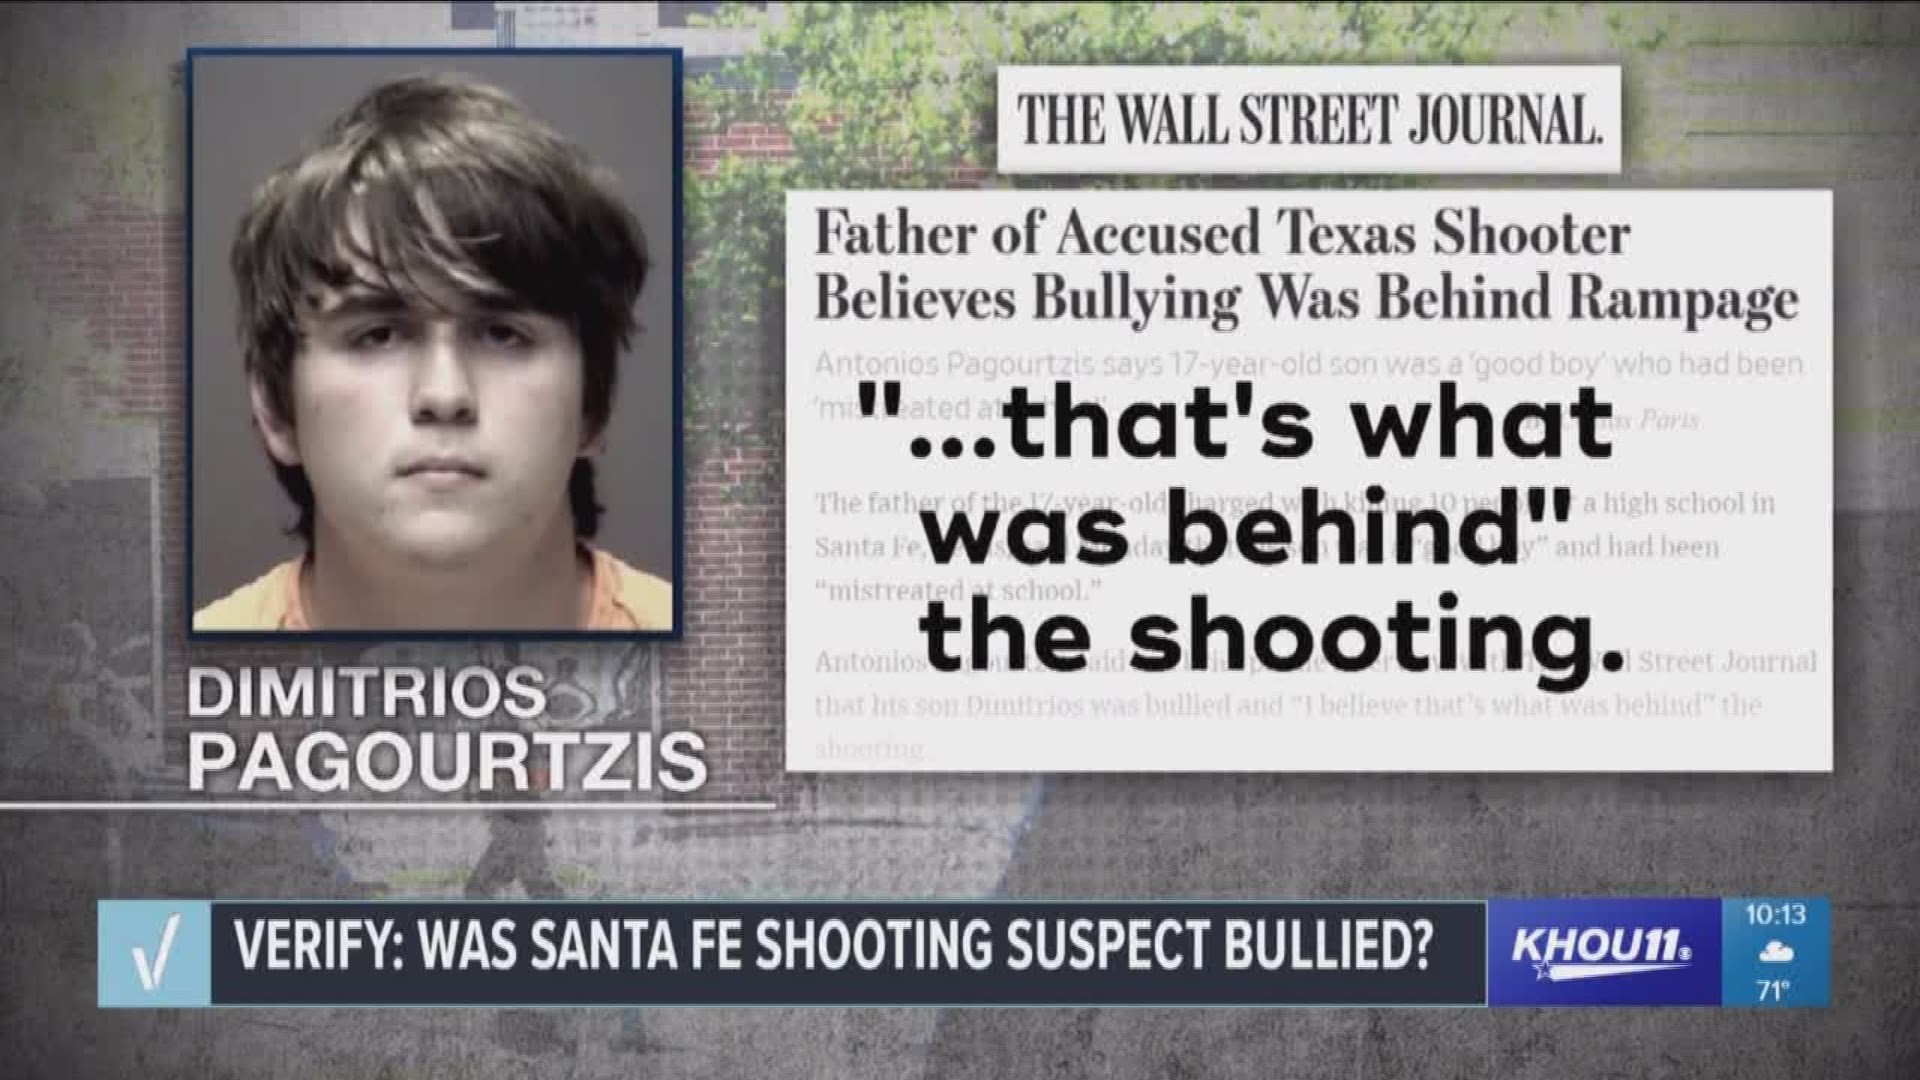 Was the Santa Fe shooting suspect bullied? KHOU 11 News reporter Lauren Talarico verifies.